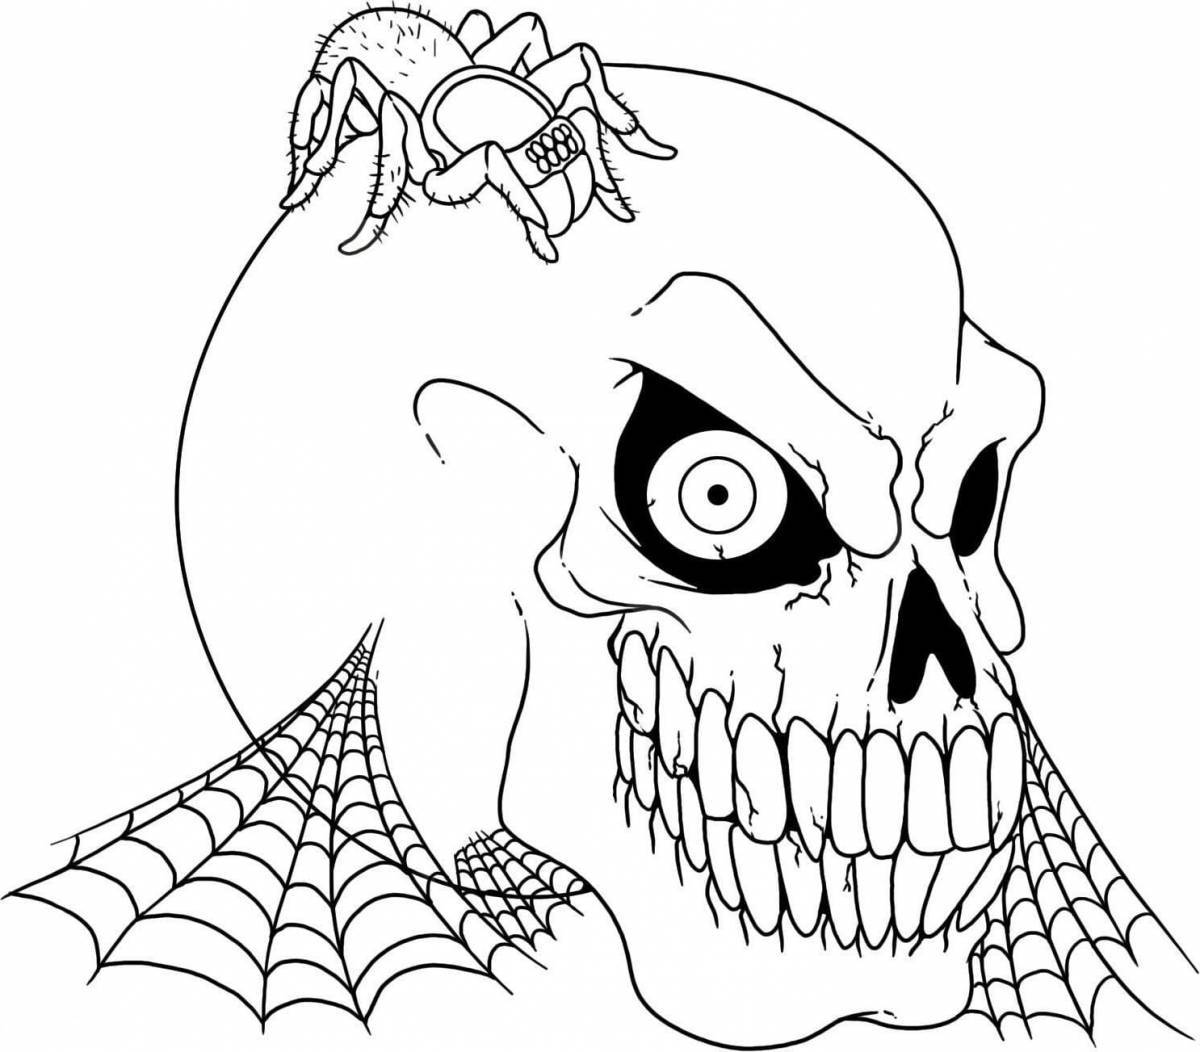 Unique skull coloring